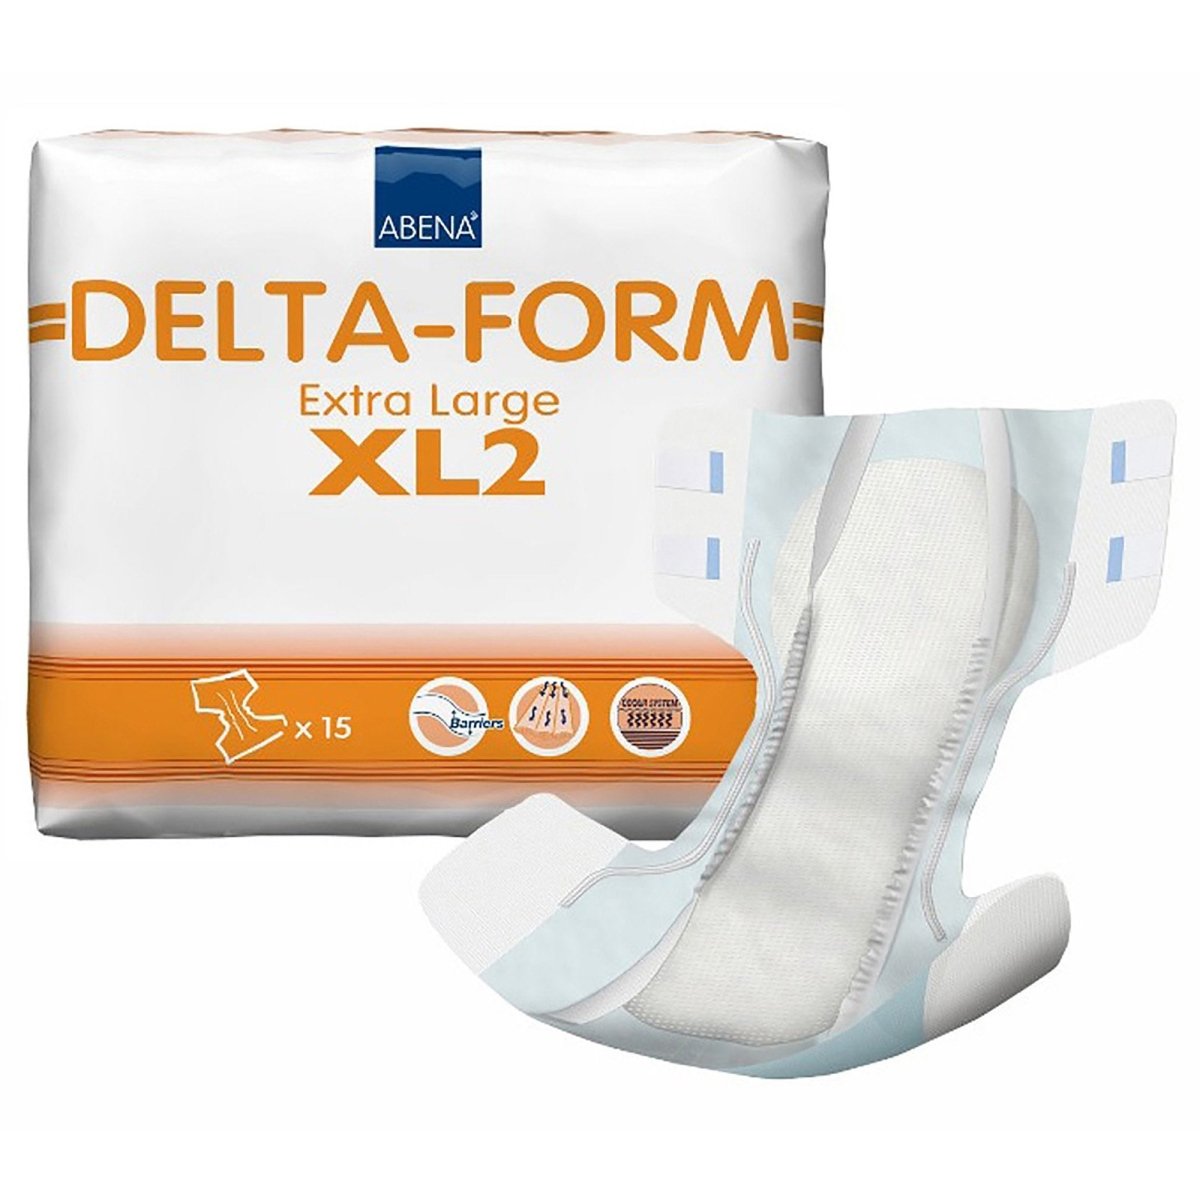 Abena Delta Form Xl2 Incontinence Briefs - 959529_CS - 1